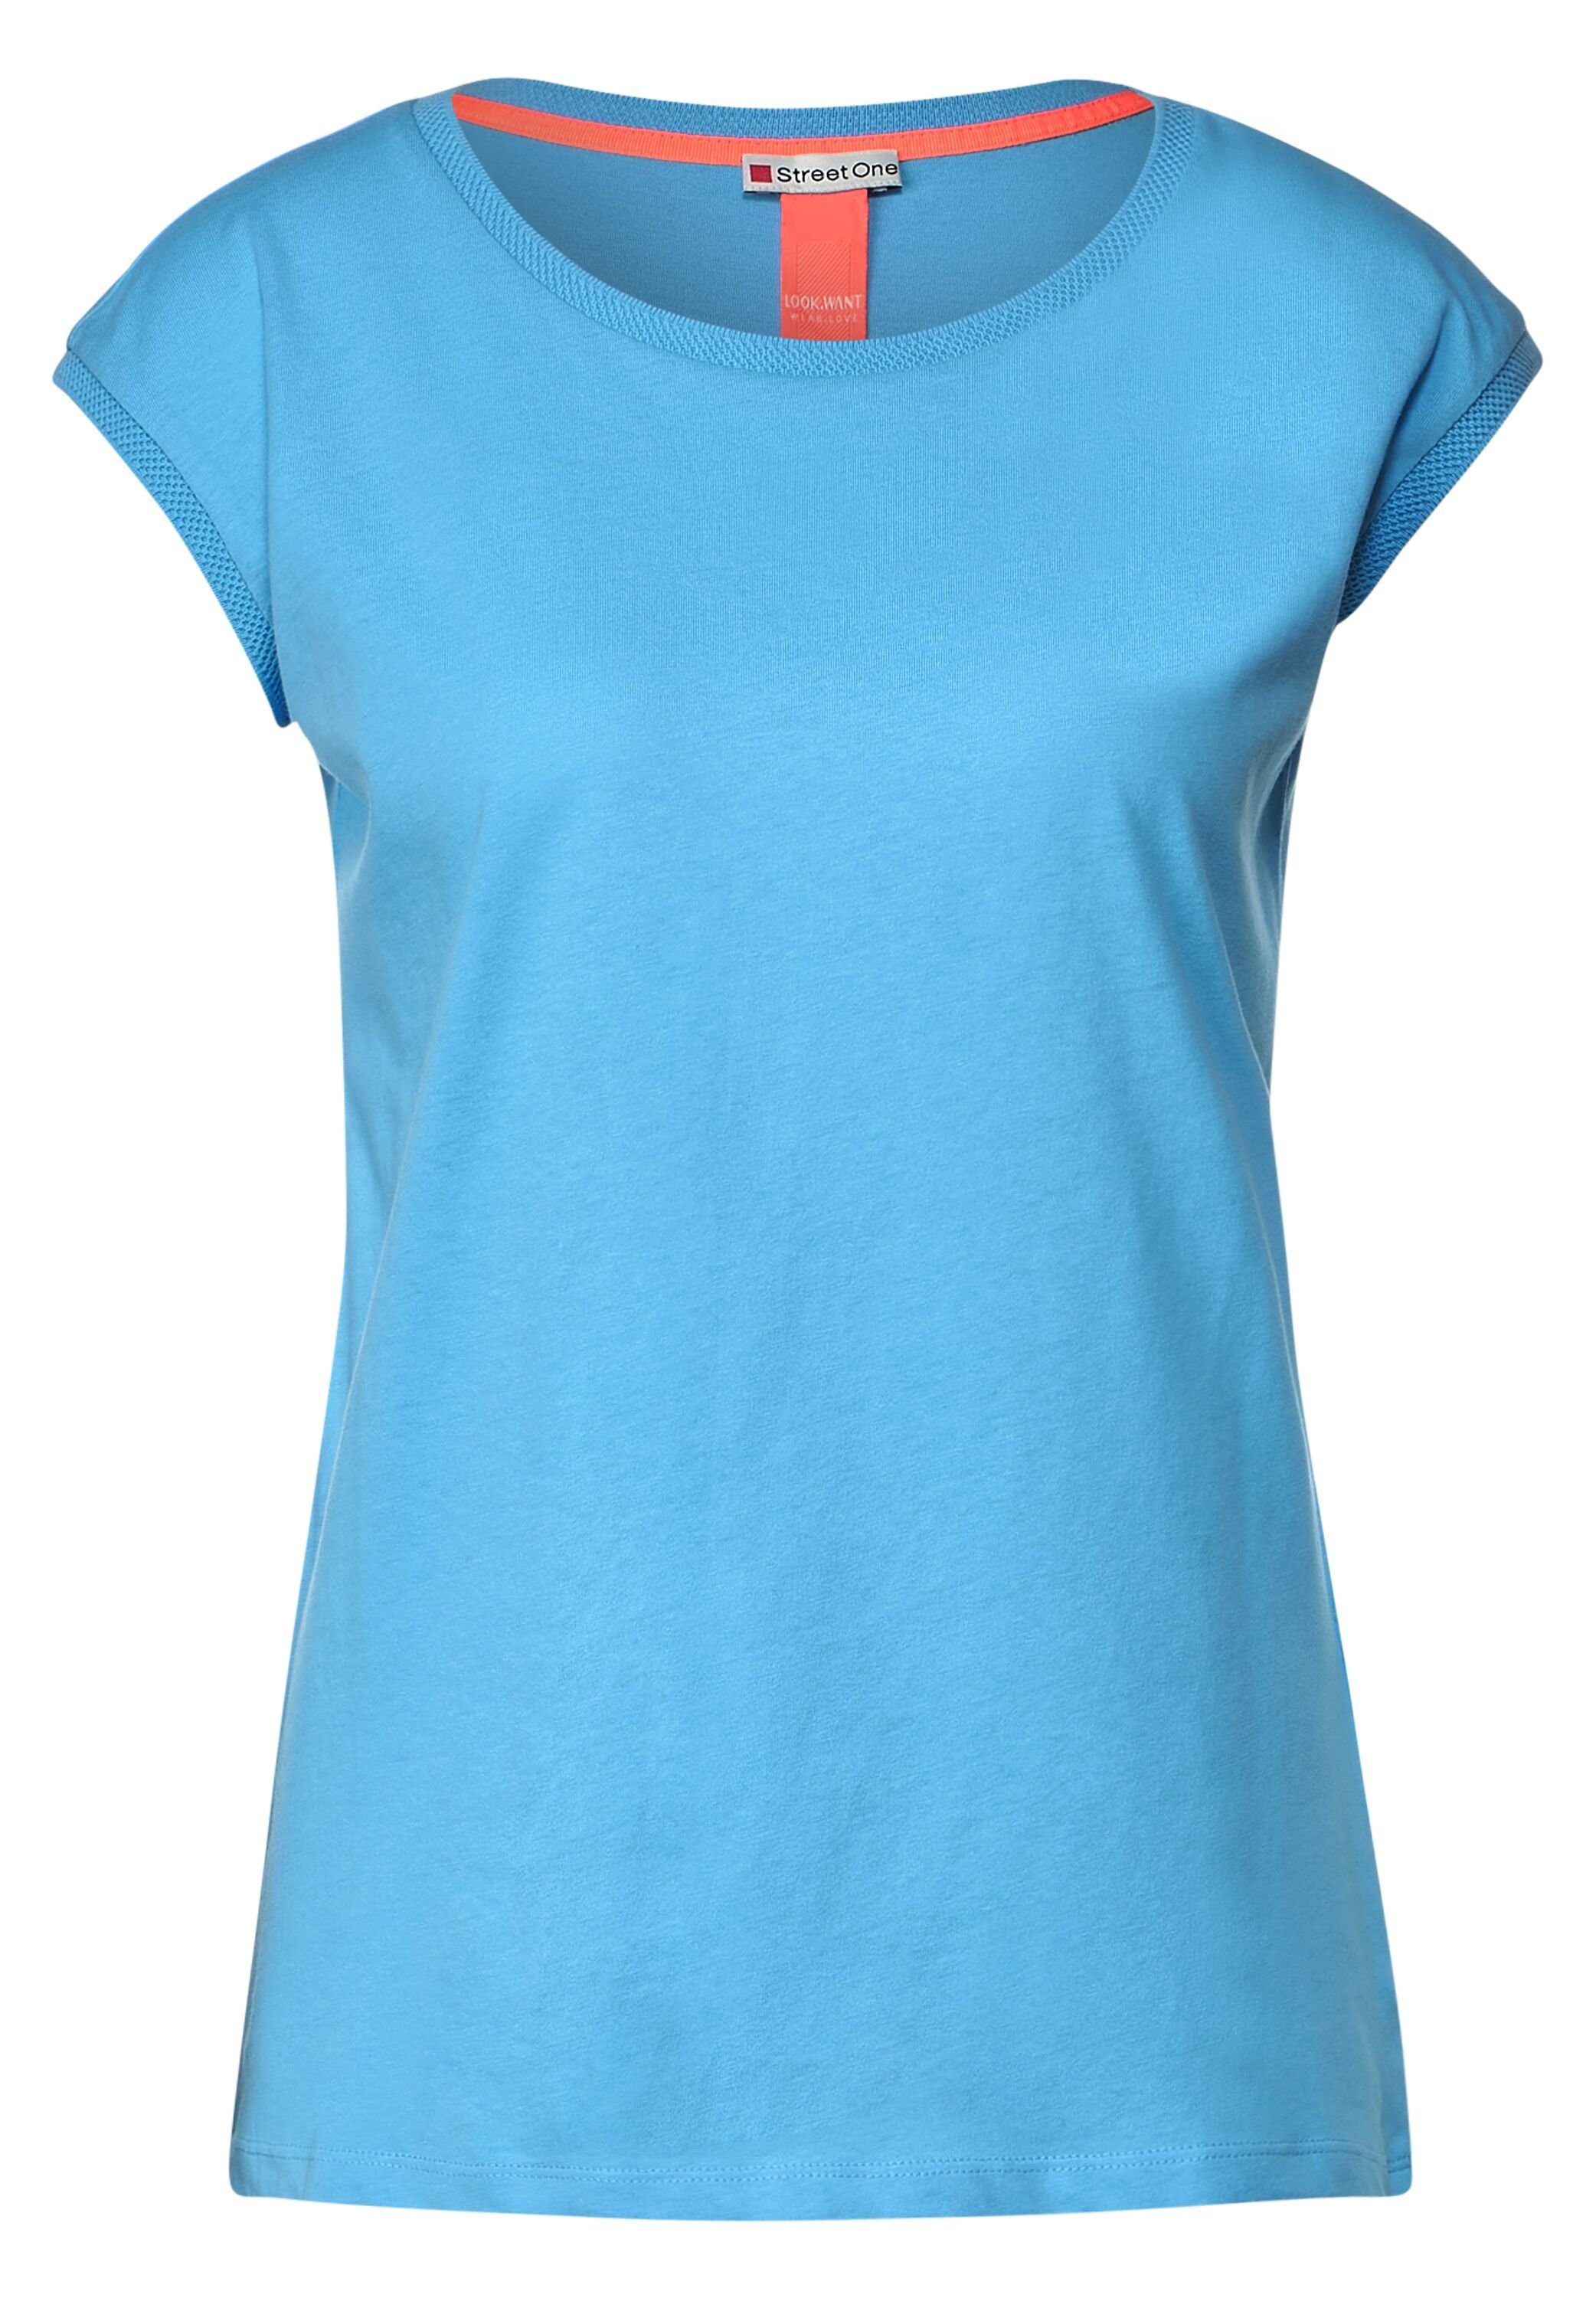 splash STREET in ONE T-Shirt Unifarbe blue